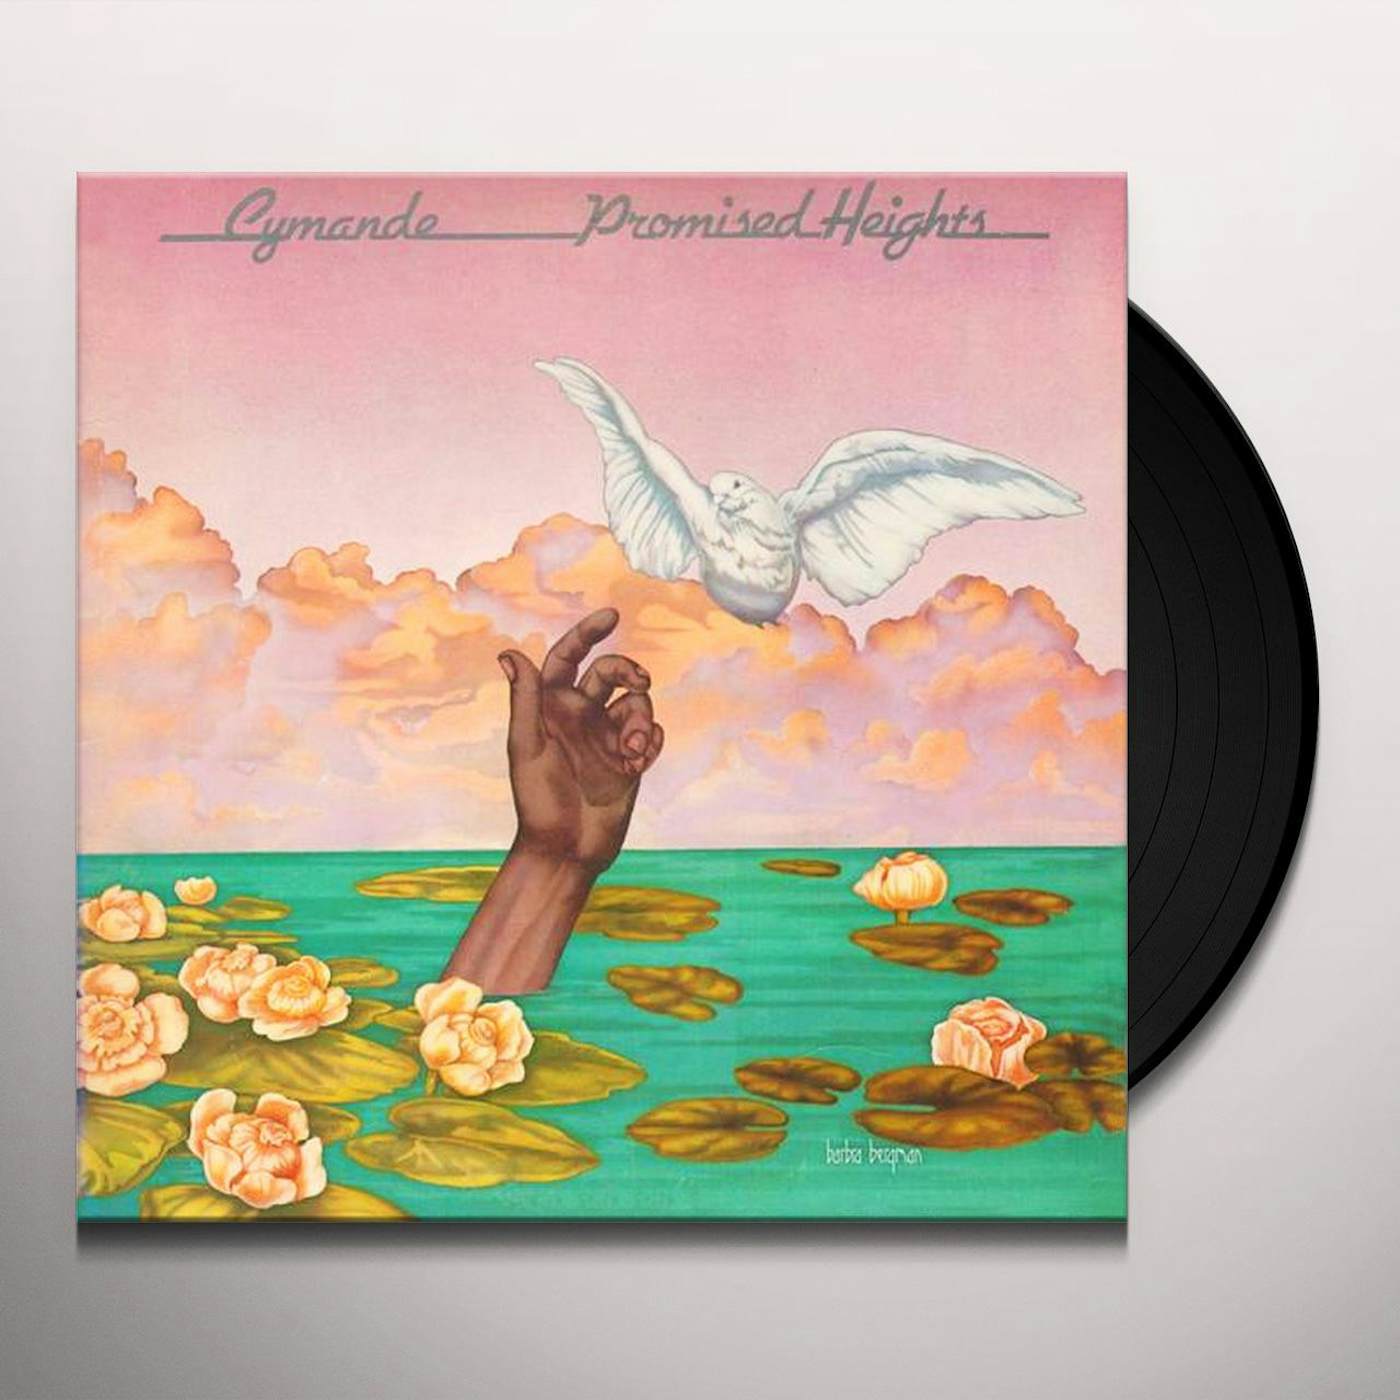 Cymande Promised Heights Vinyl Record